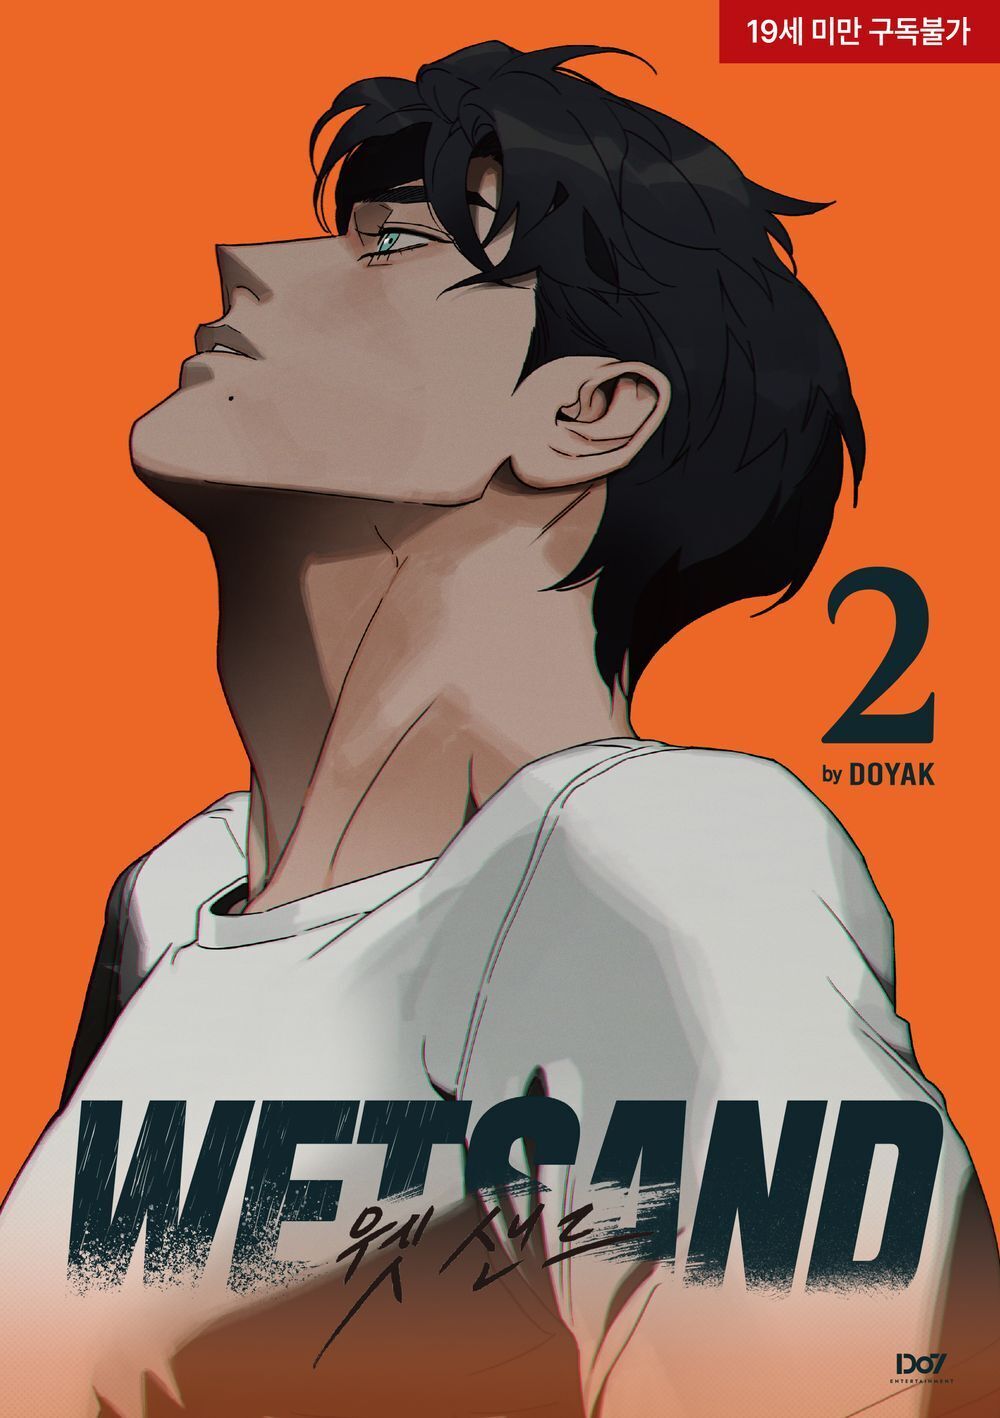 Wet Sand Vol 2 Original Korean Webtoon Book Manhwa Comics Manga Tappytoon BL